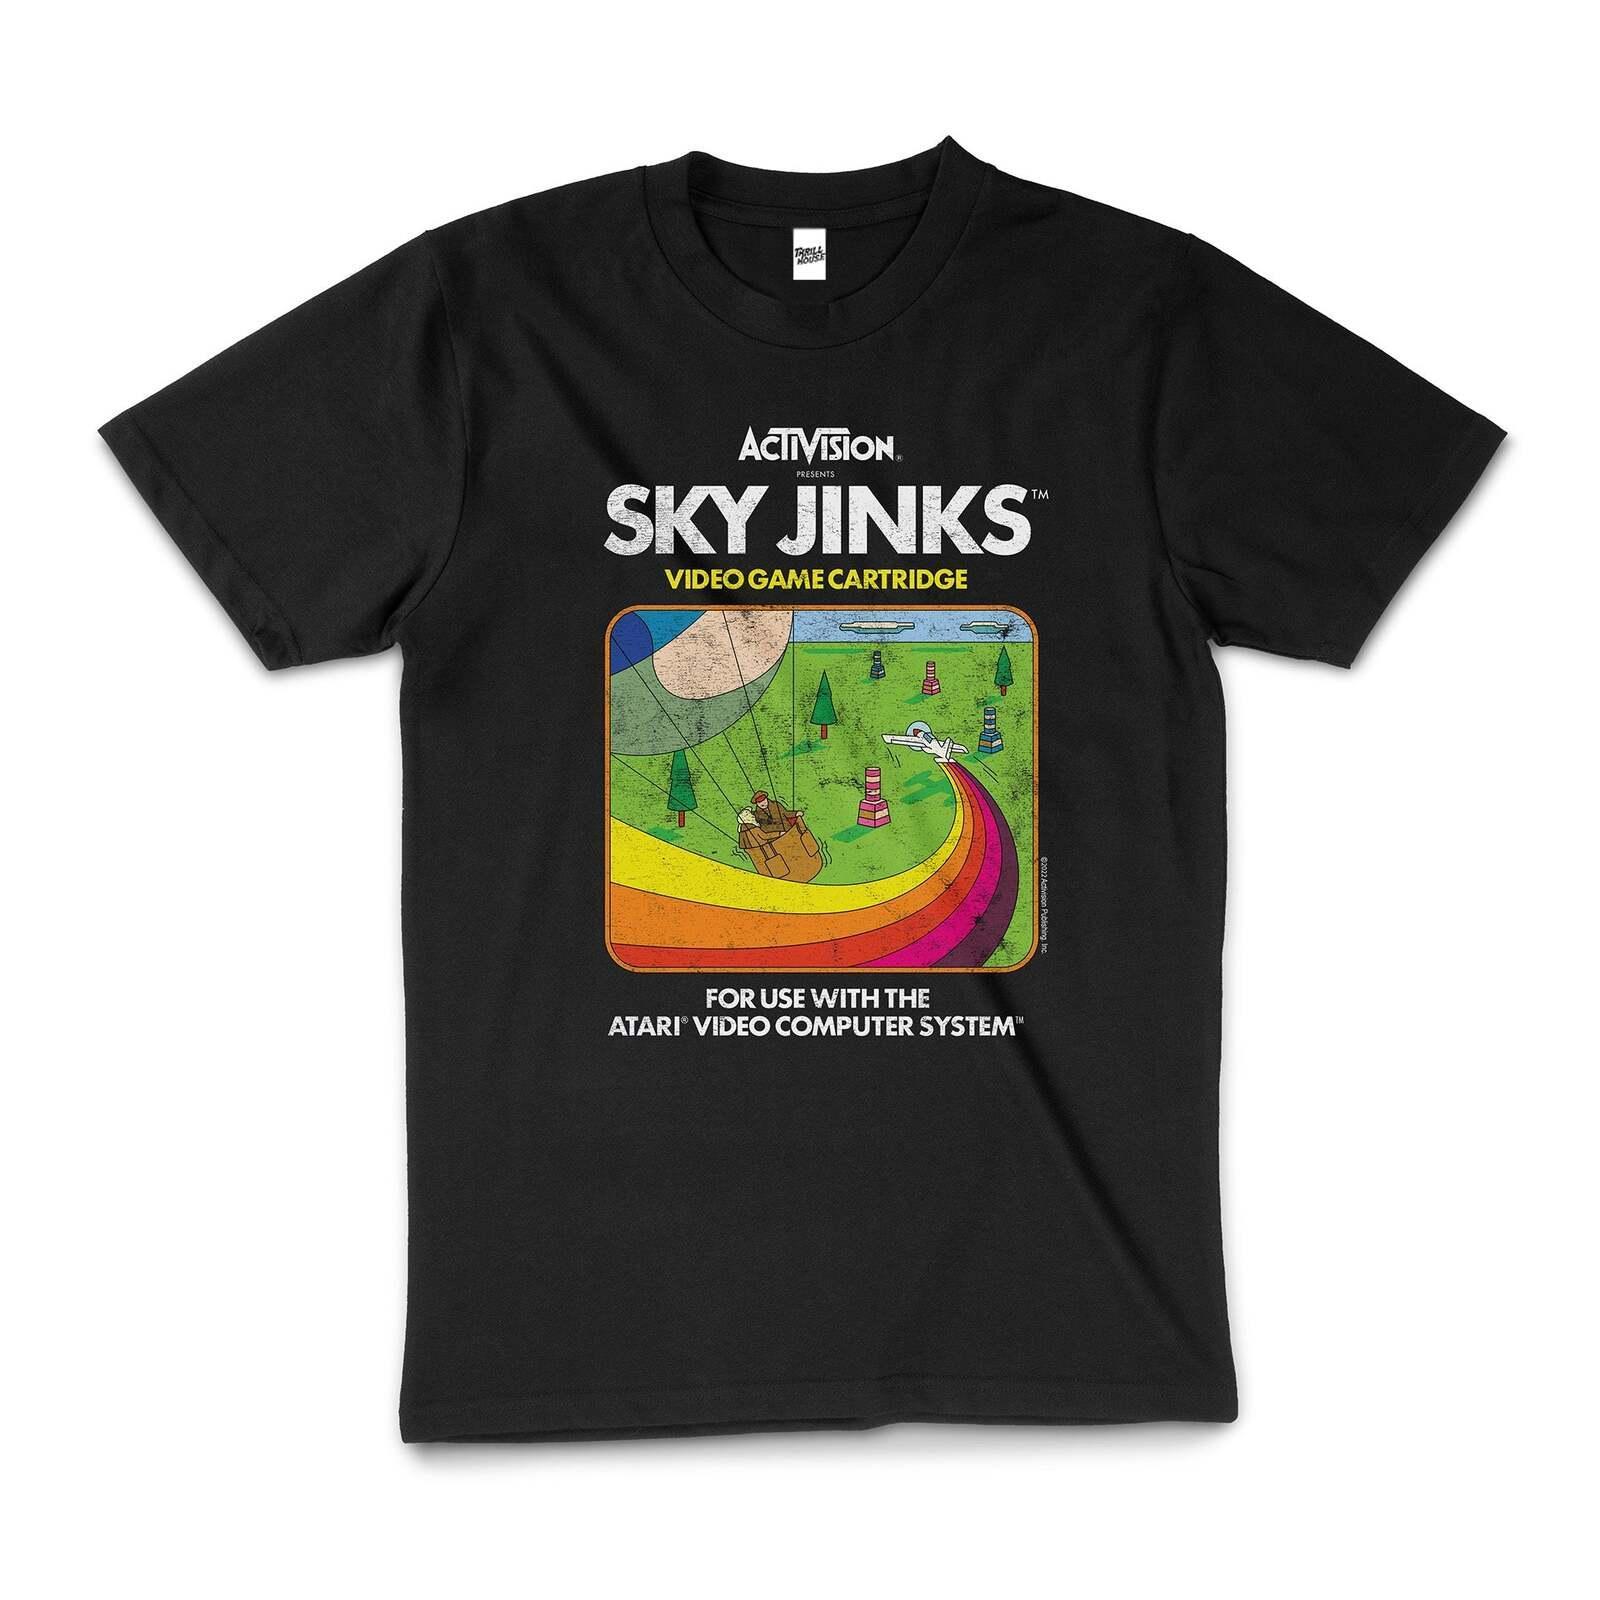 Activision 80s Nerd Geek Gamer Sky Jinks Cotton T-Shirt Unisex Tee Black